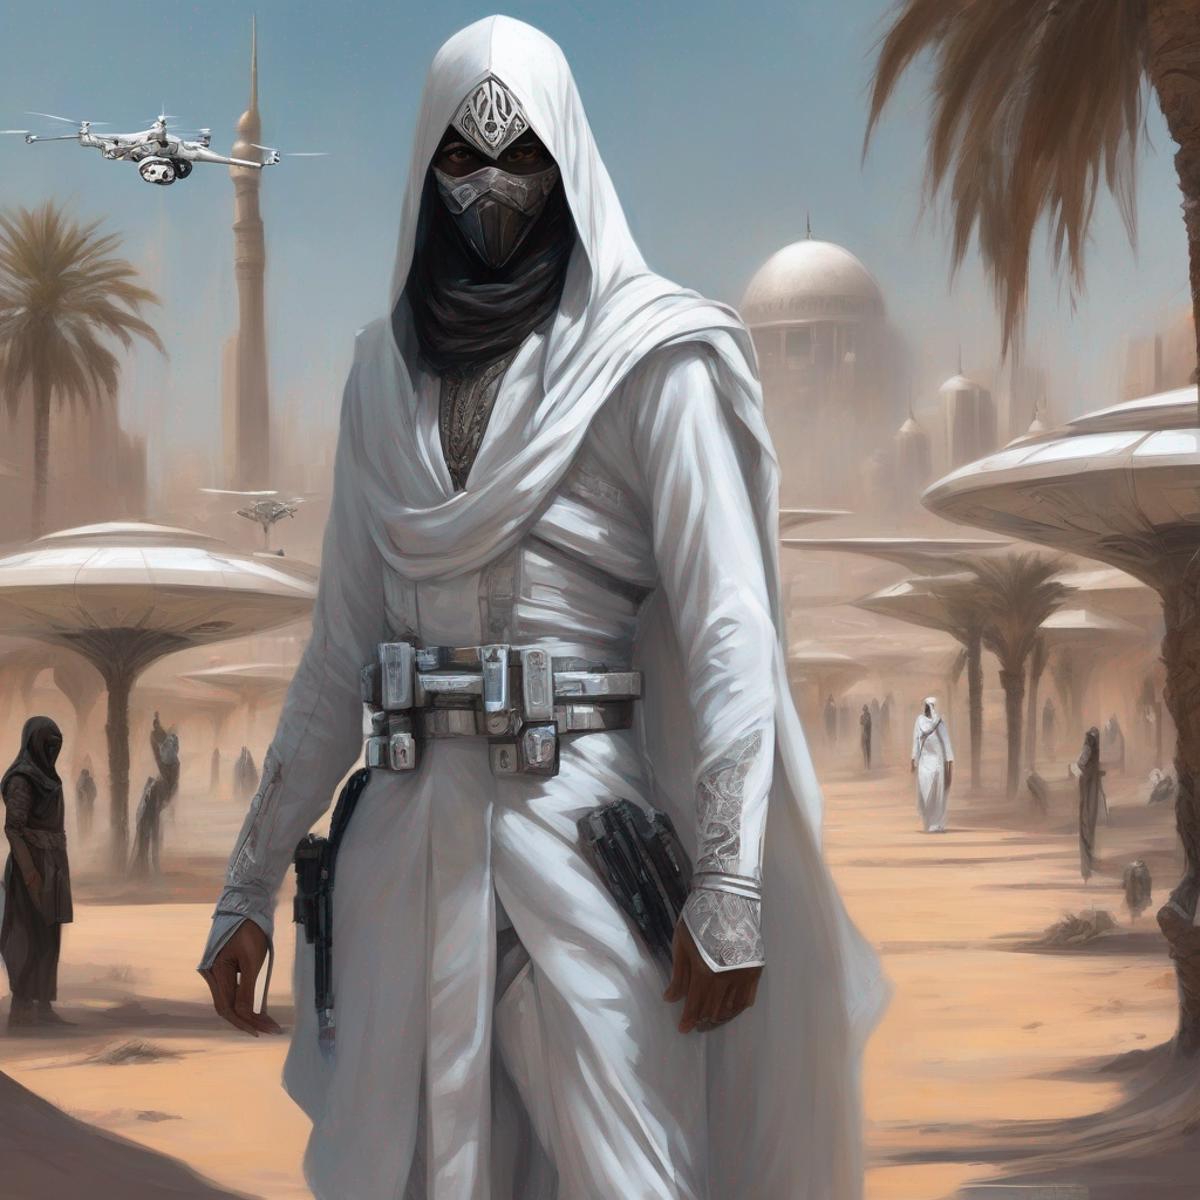 johnslegersart Arab scifi image by johnslegers